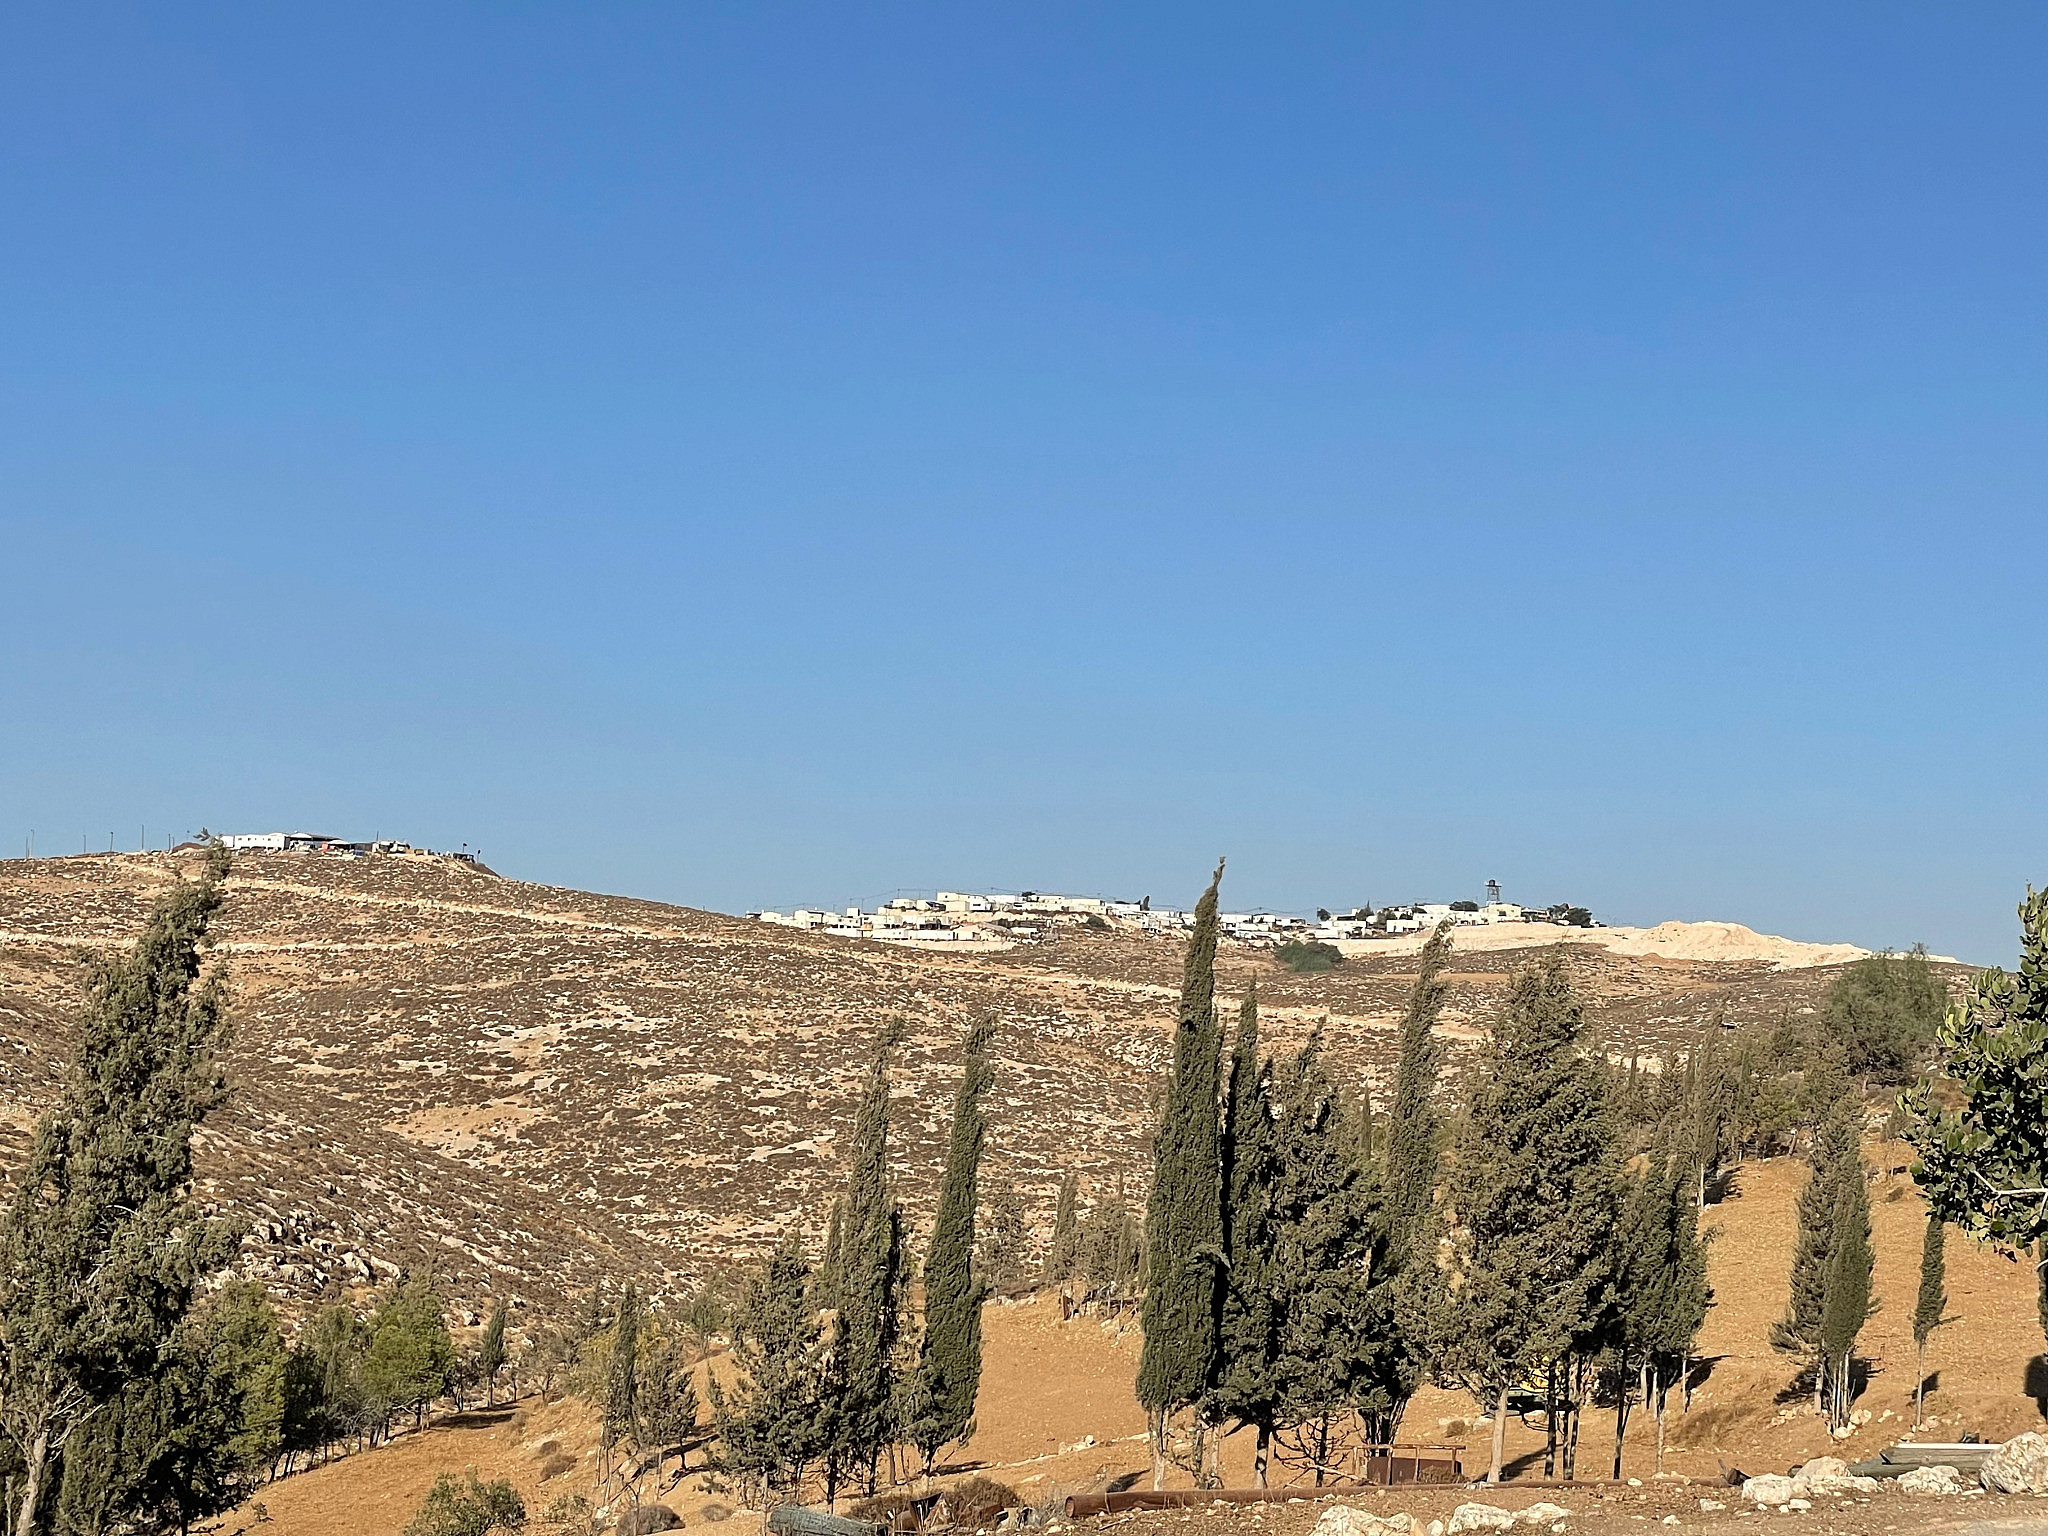 The Israeli settler outpost of Asa'el, West Bank. (Natasha Westheimer)